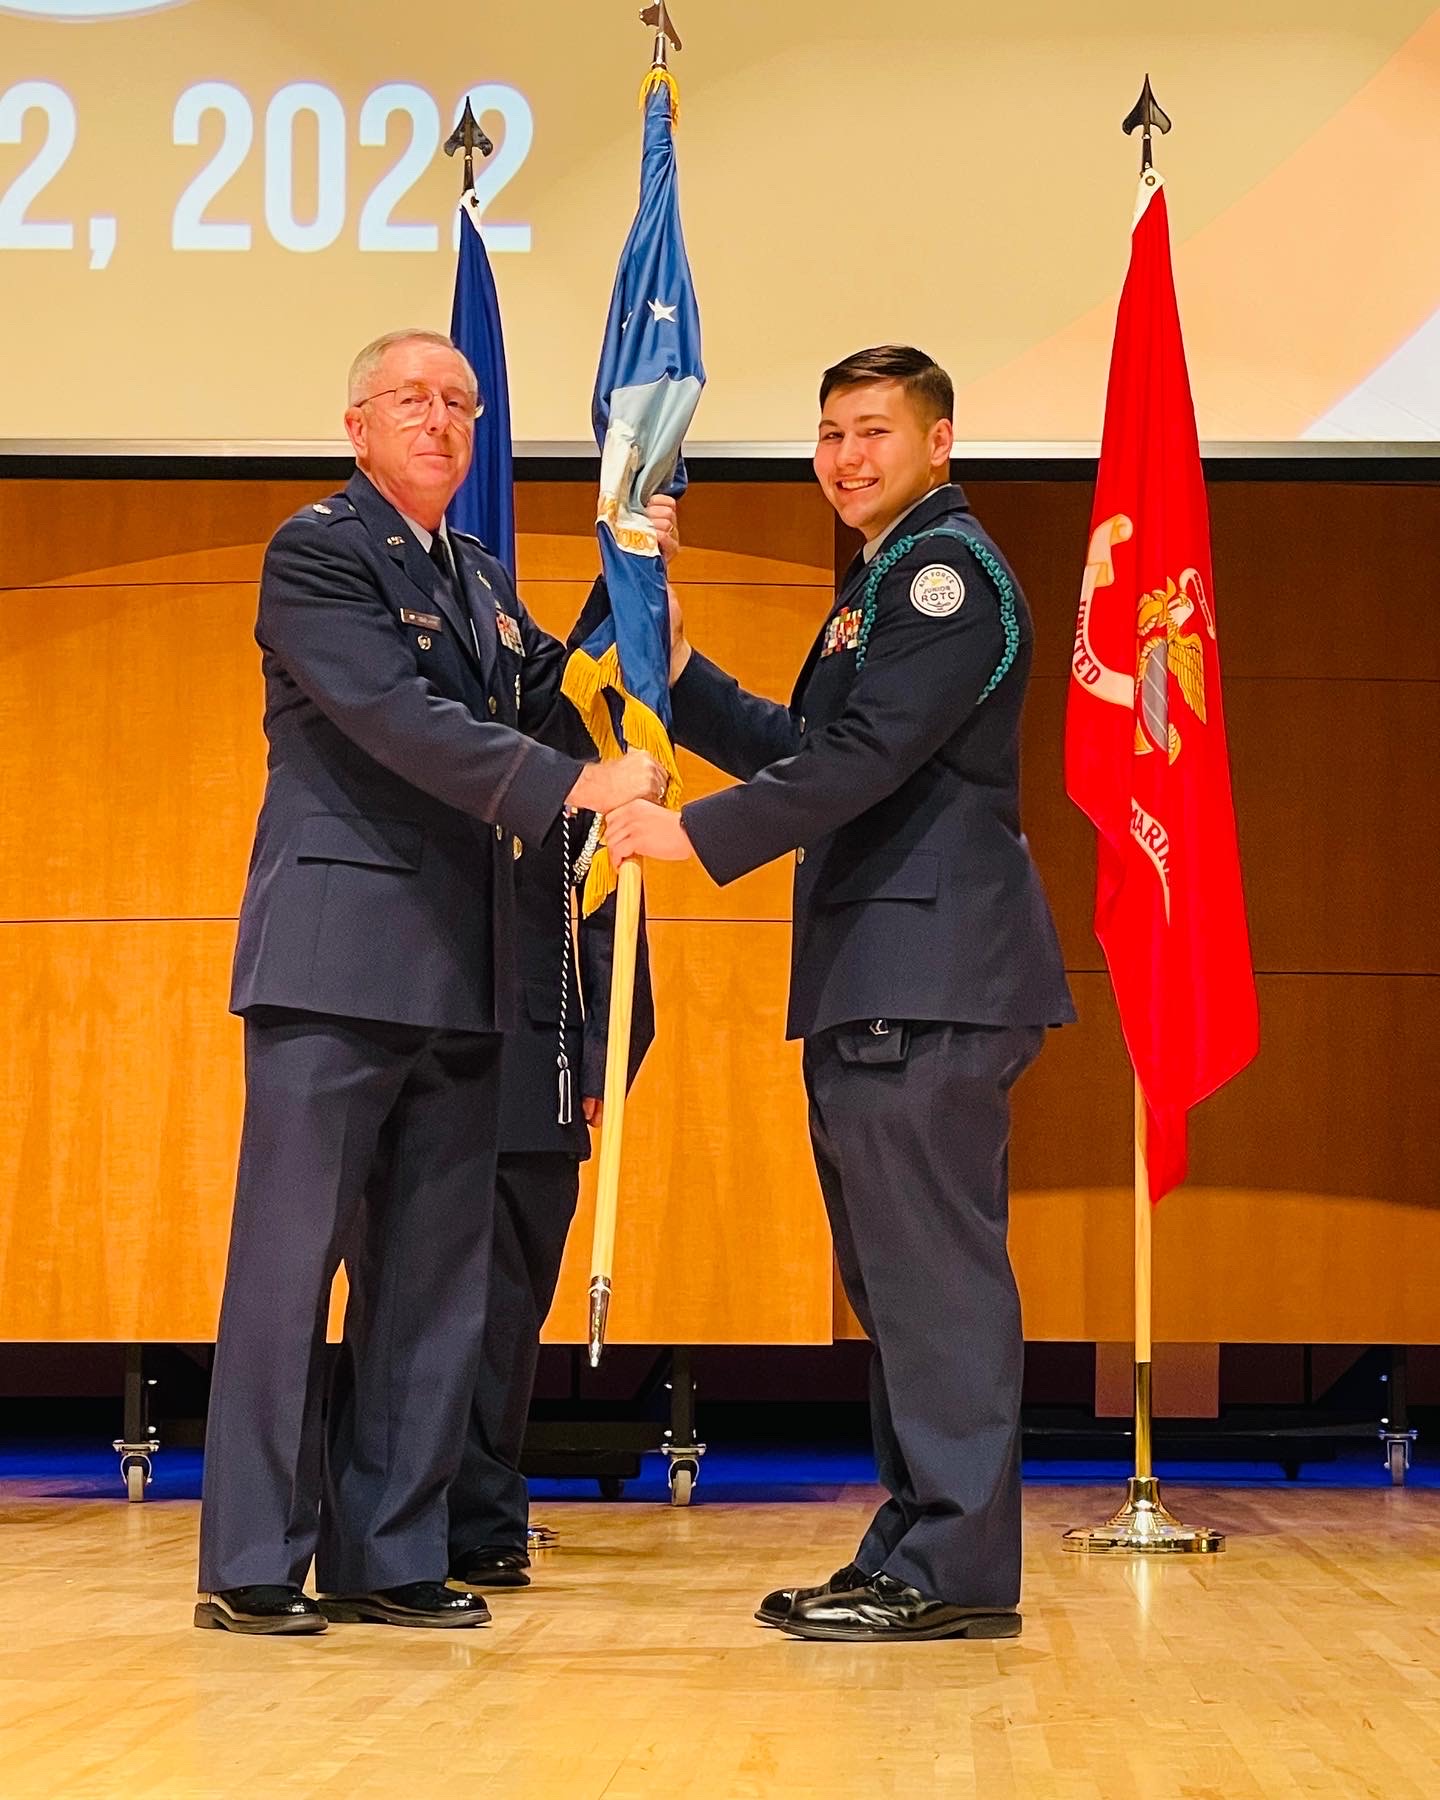 Ramond receiving award from Commanding Officer